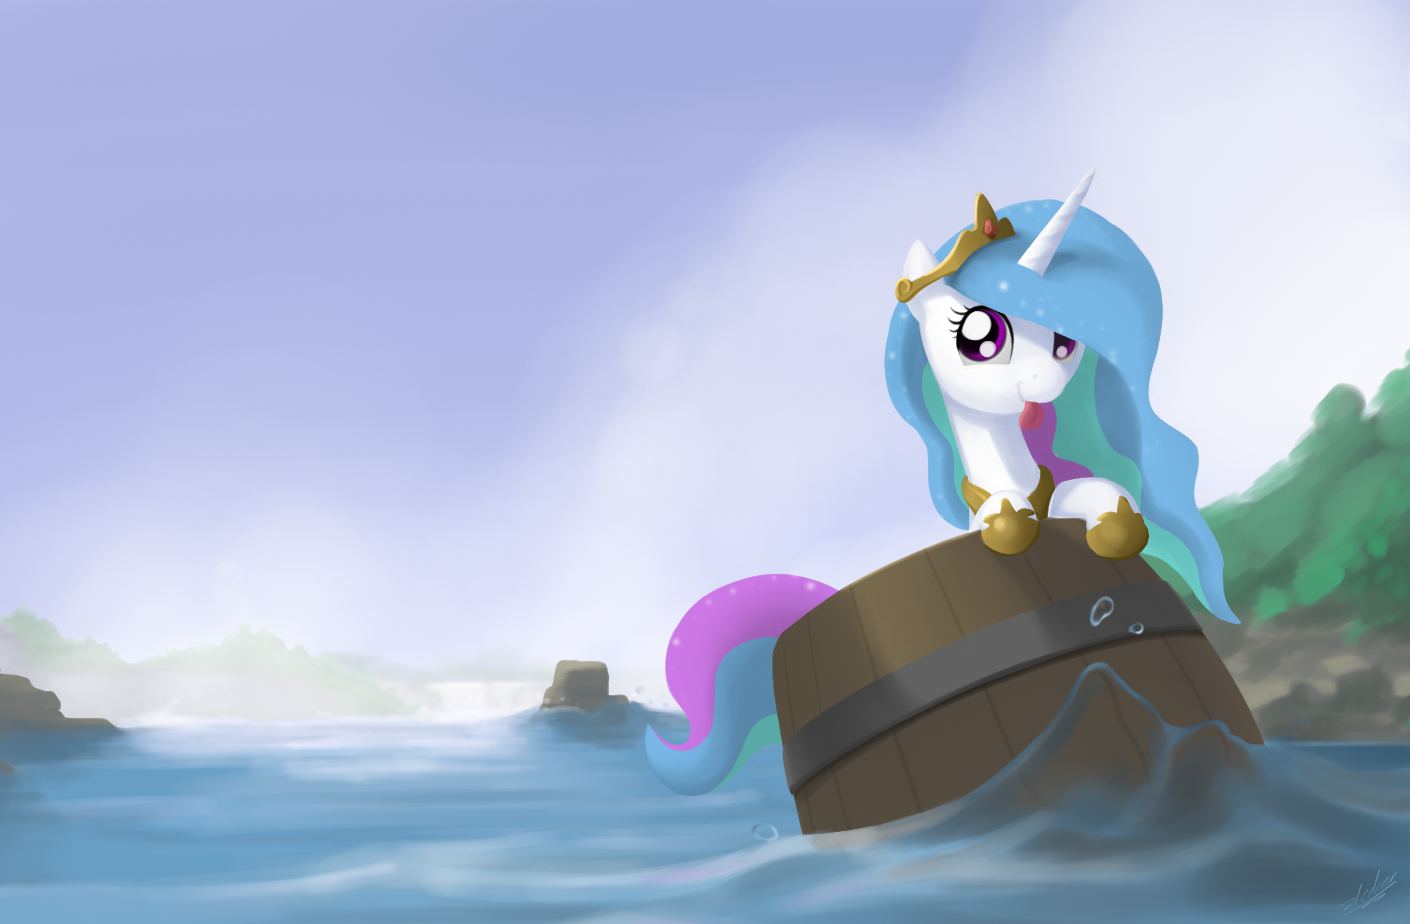 The barrel princess by zlack3r